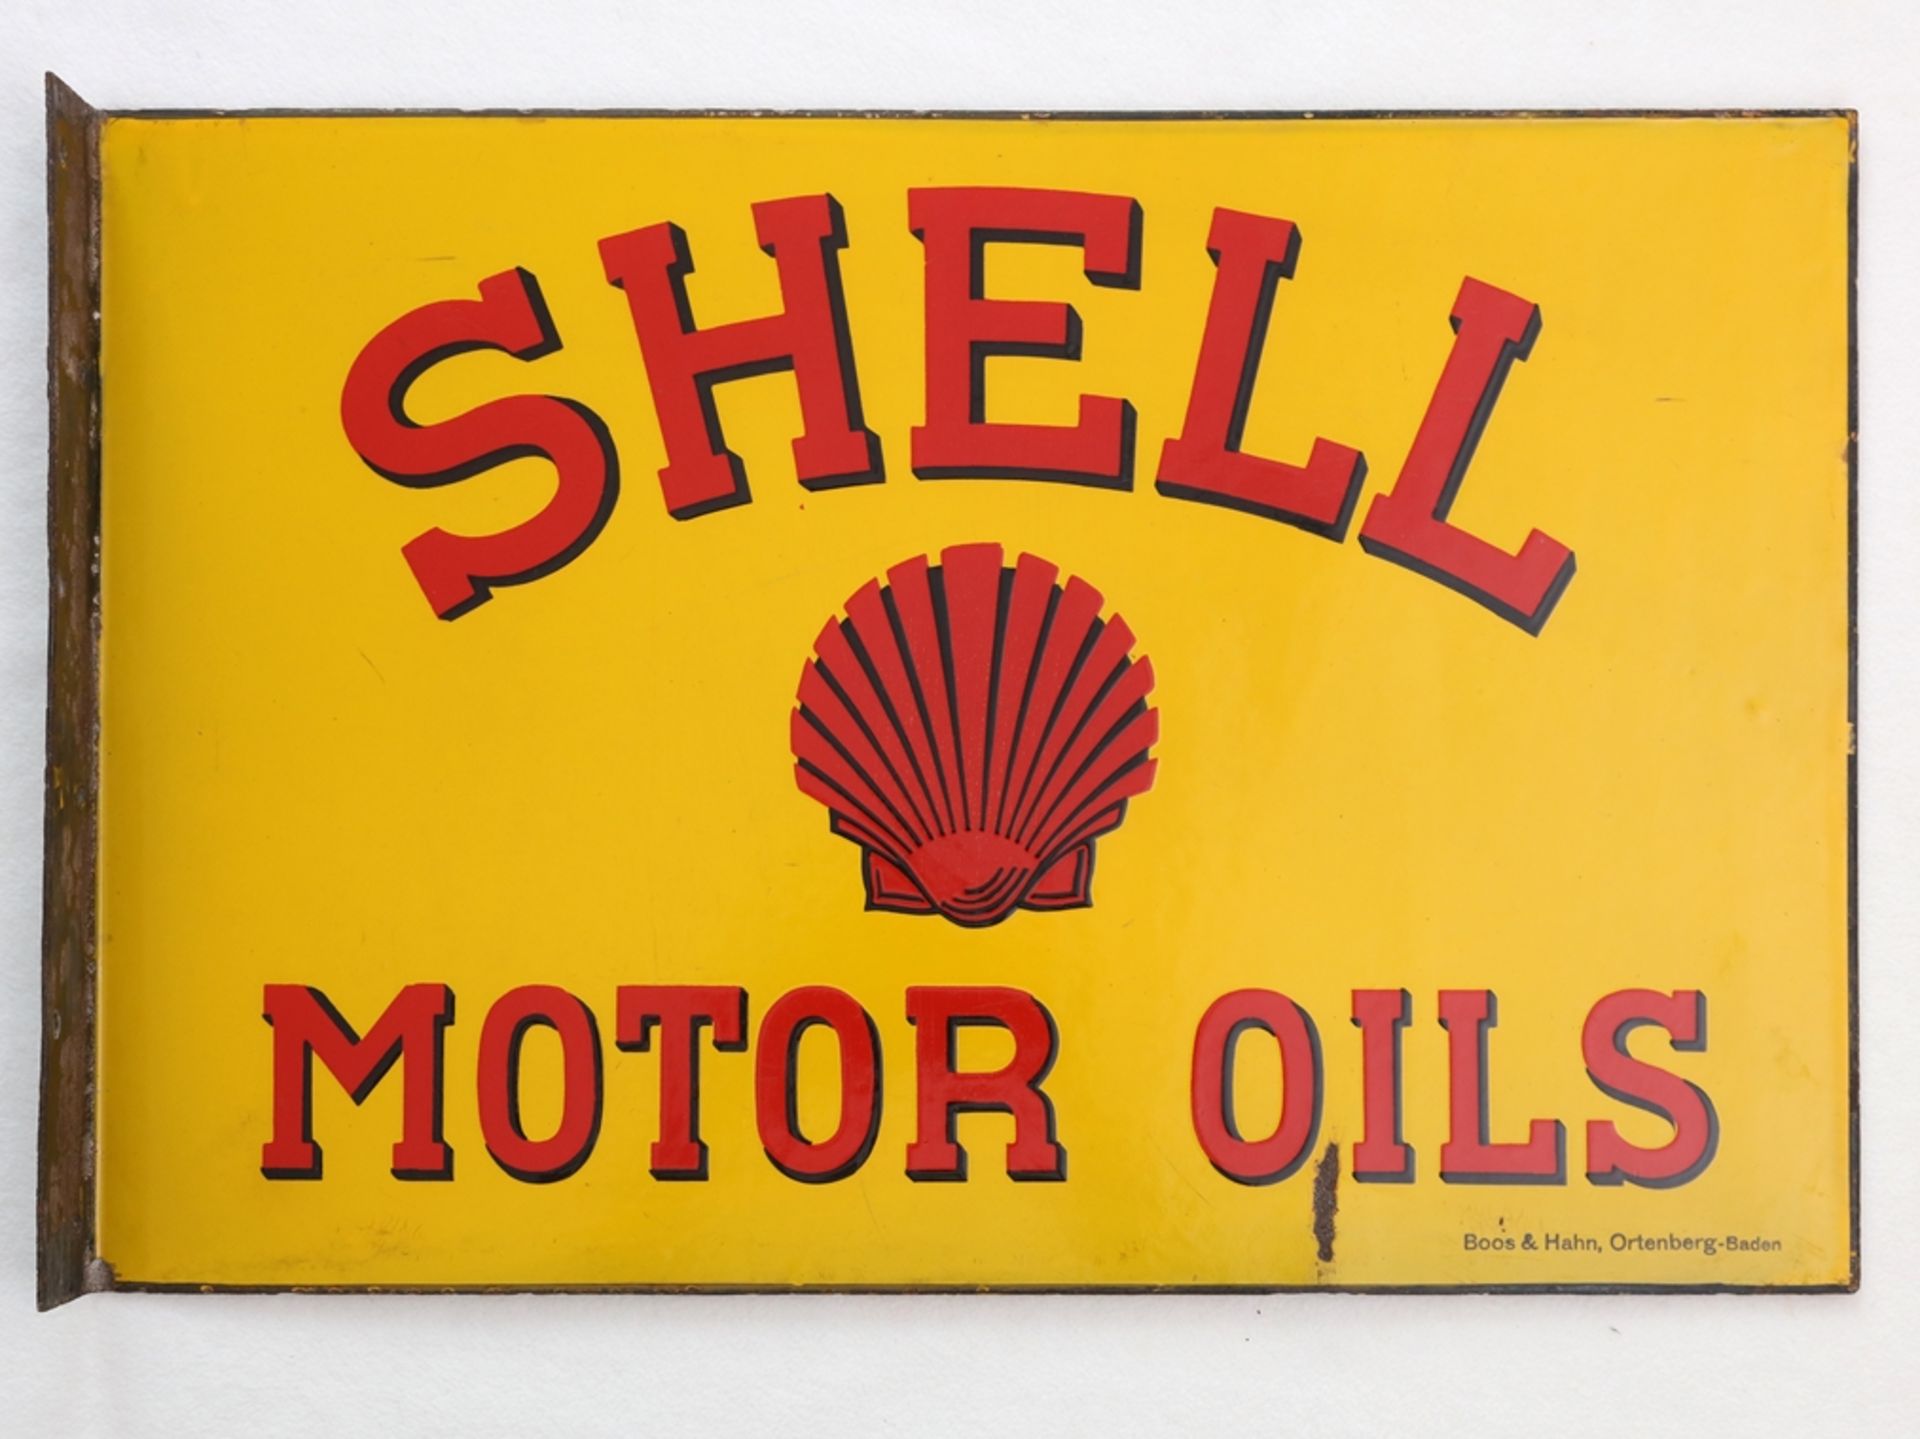 Shell Motor Oils enamel sign, Austria, around 1920 - Image 6 of 7